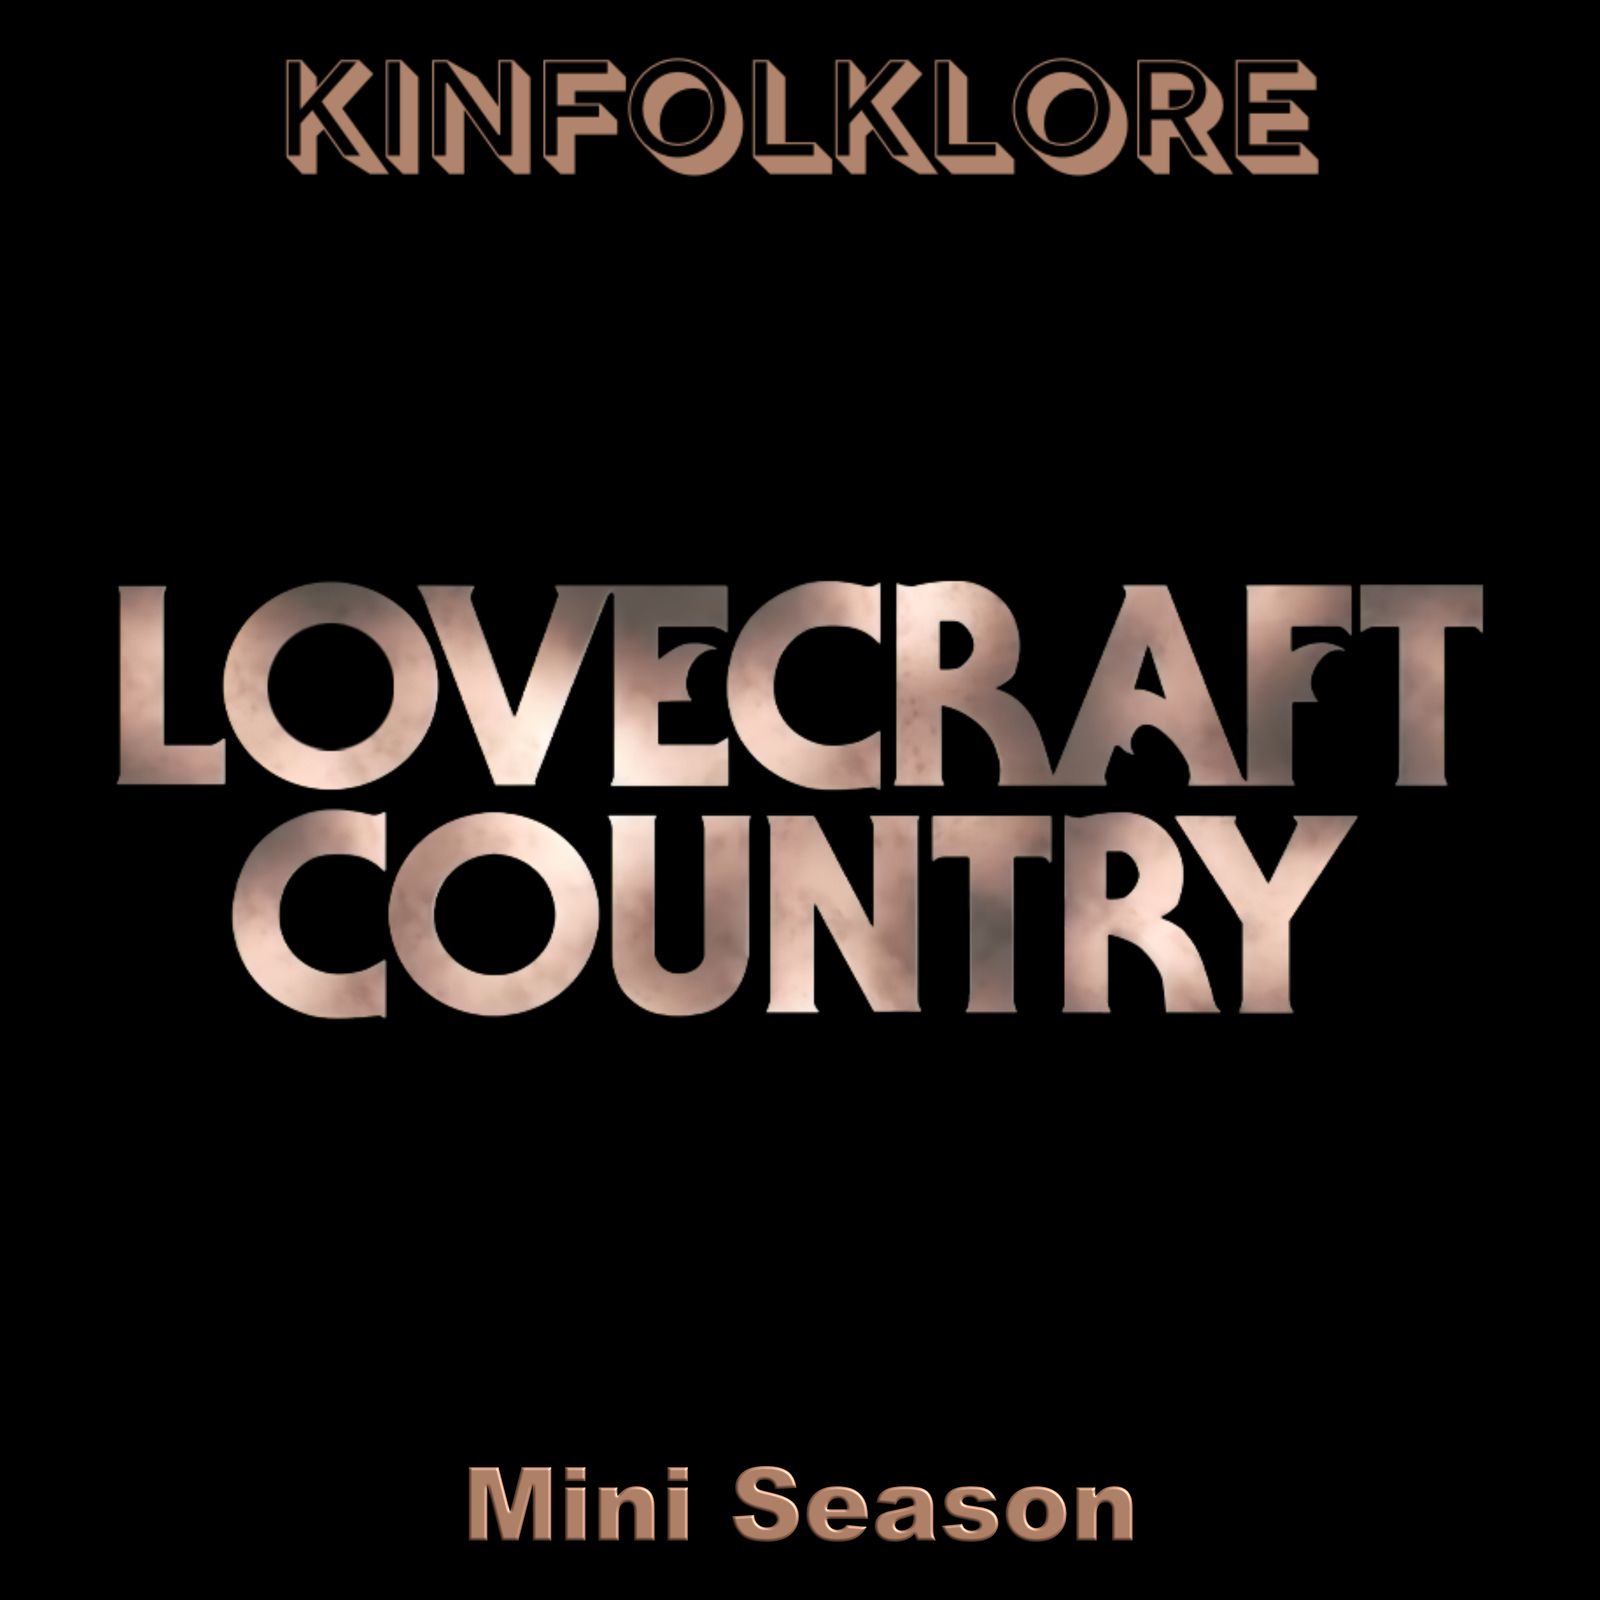 S4 Ep2: Kinfolklore: Lovecraft Country Mini Season (Episodes 6-10)